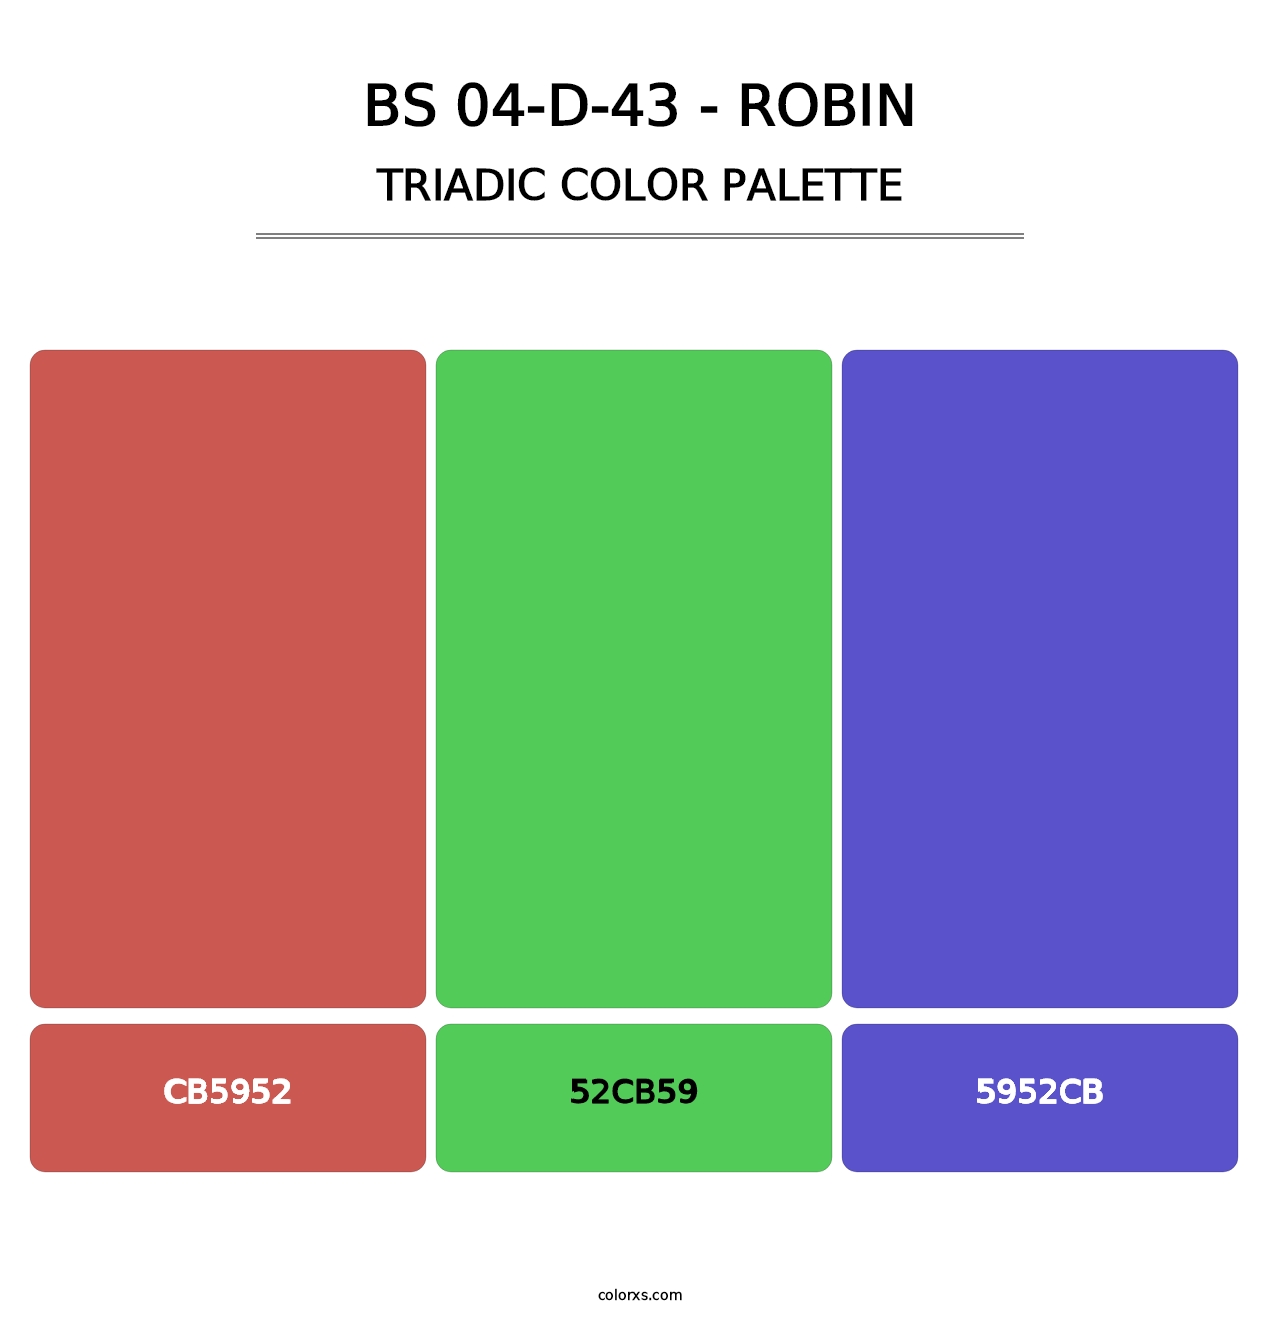 BS 04-D-43 - Robin - Triadic Color Palette